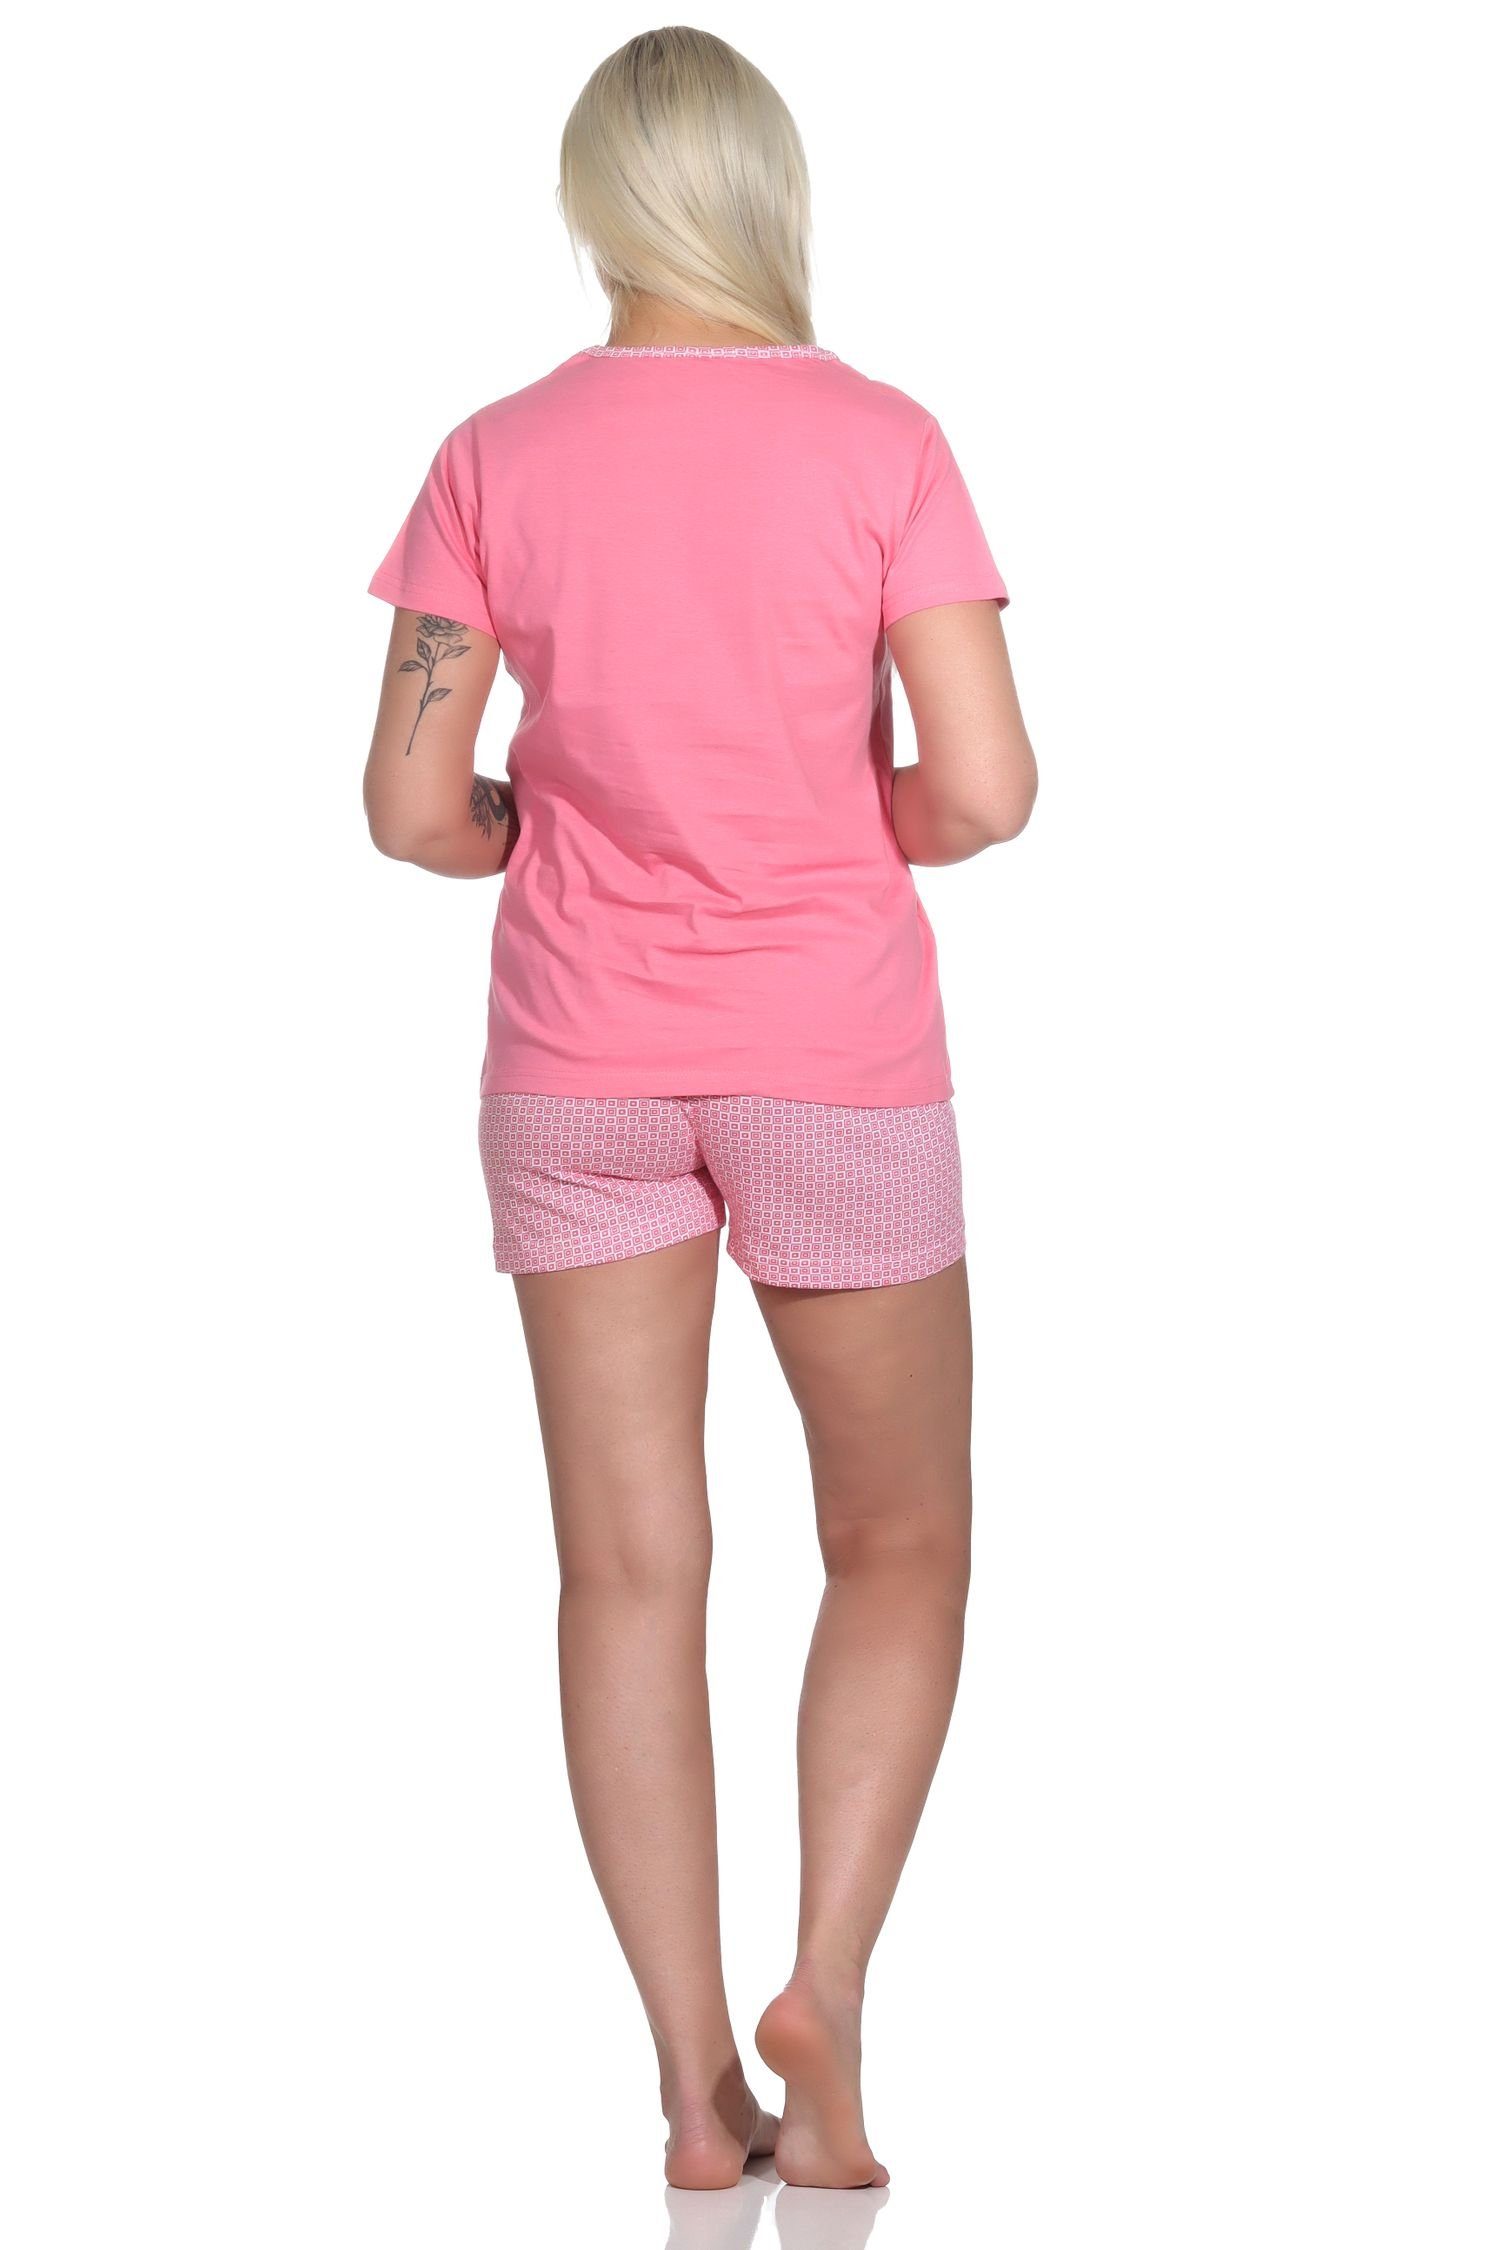 Shorty, pink und Pyjama by mit Pyjama Normann RELAX kurzer Damen Minimal-Print Luftballon-Motiv